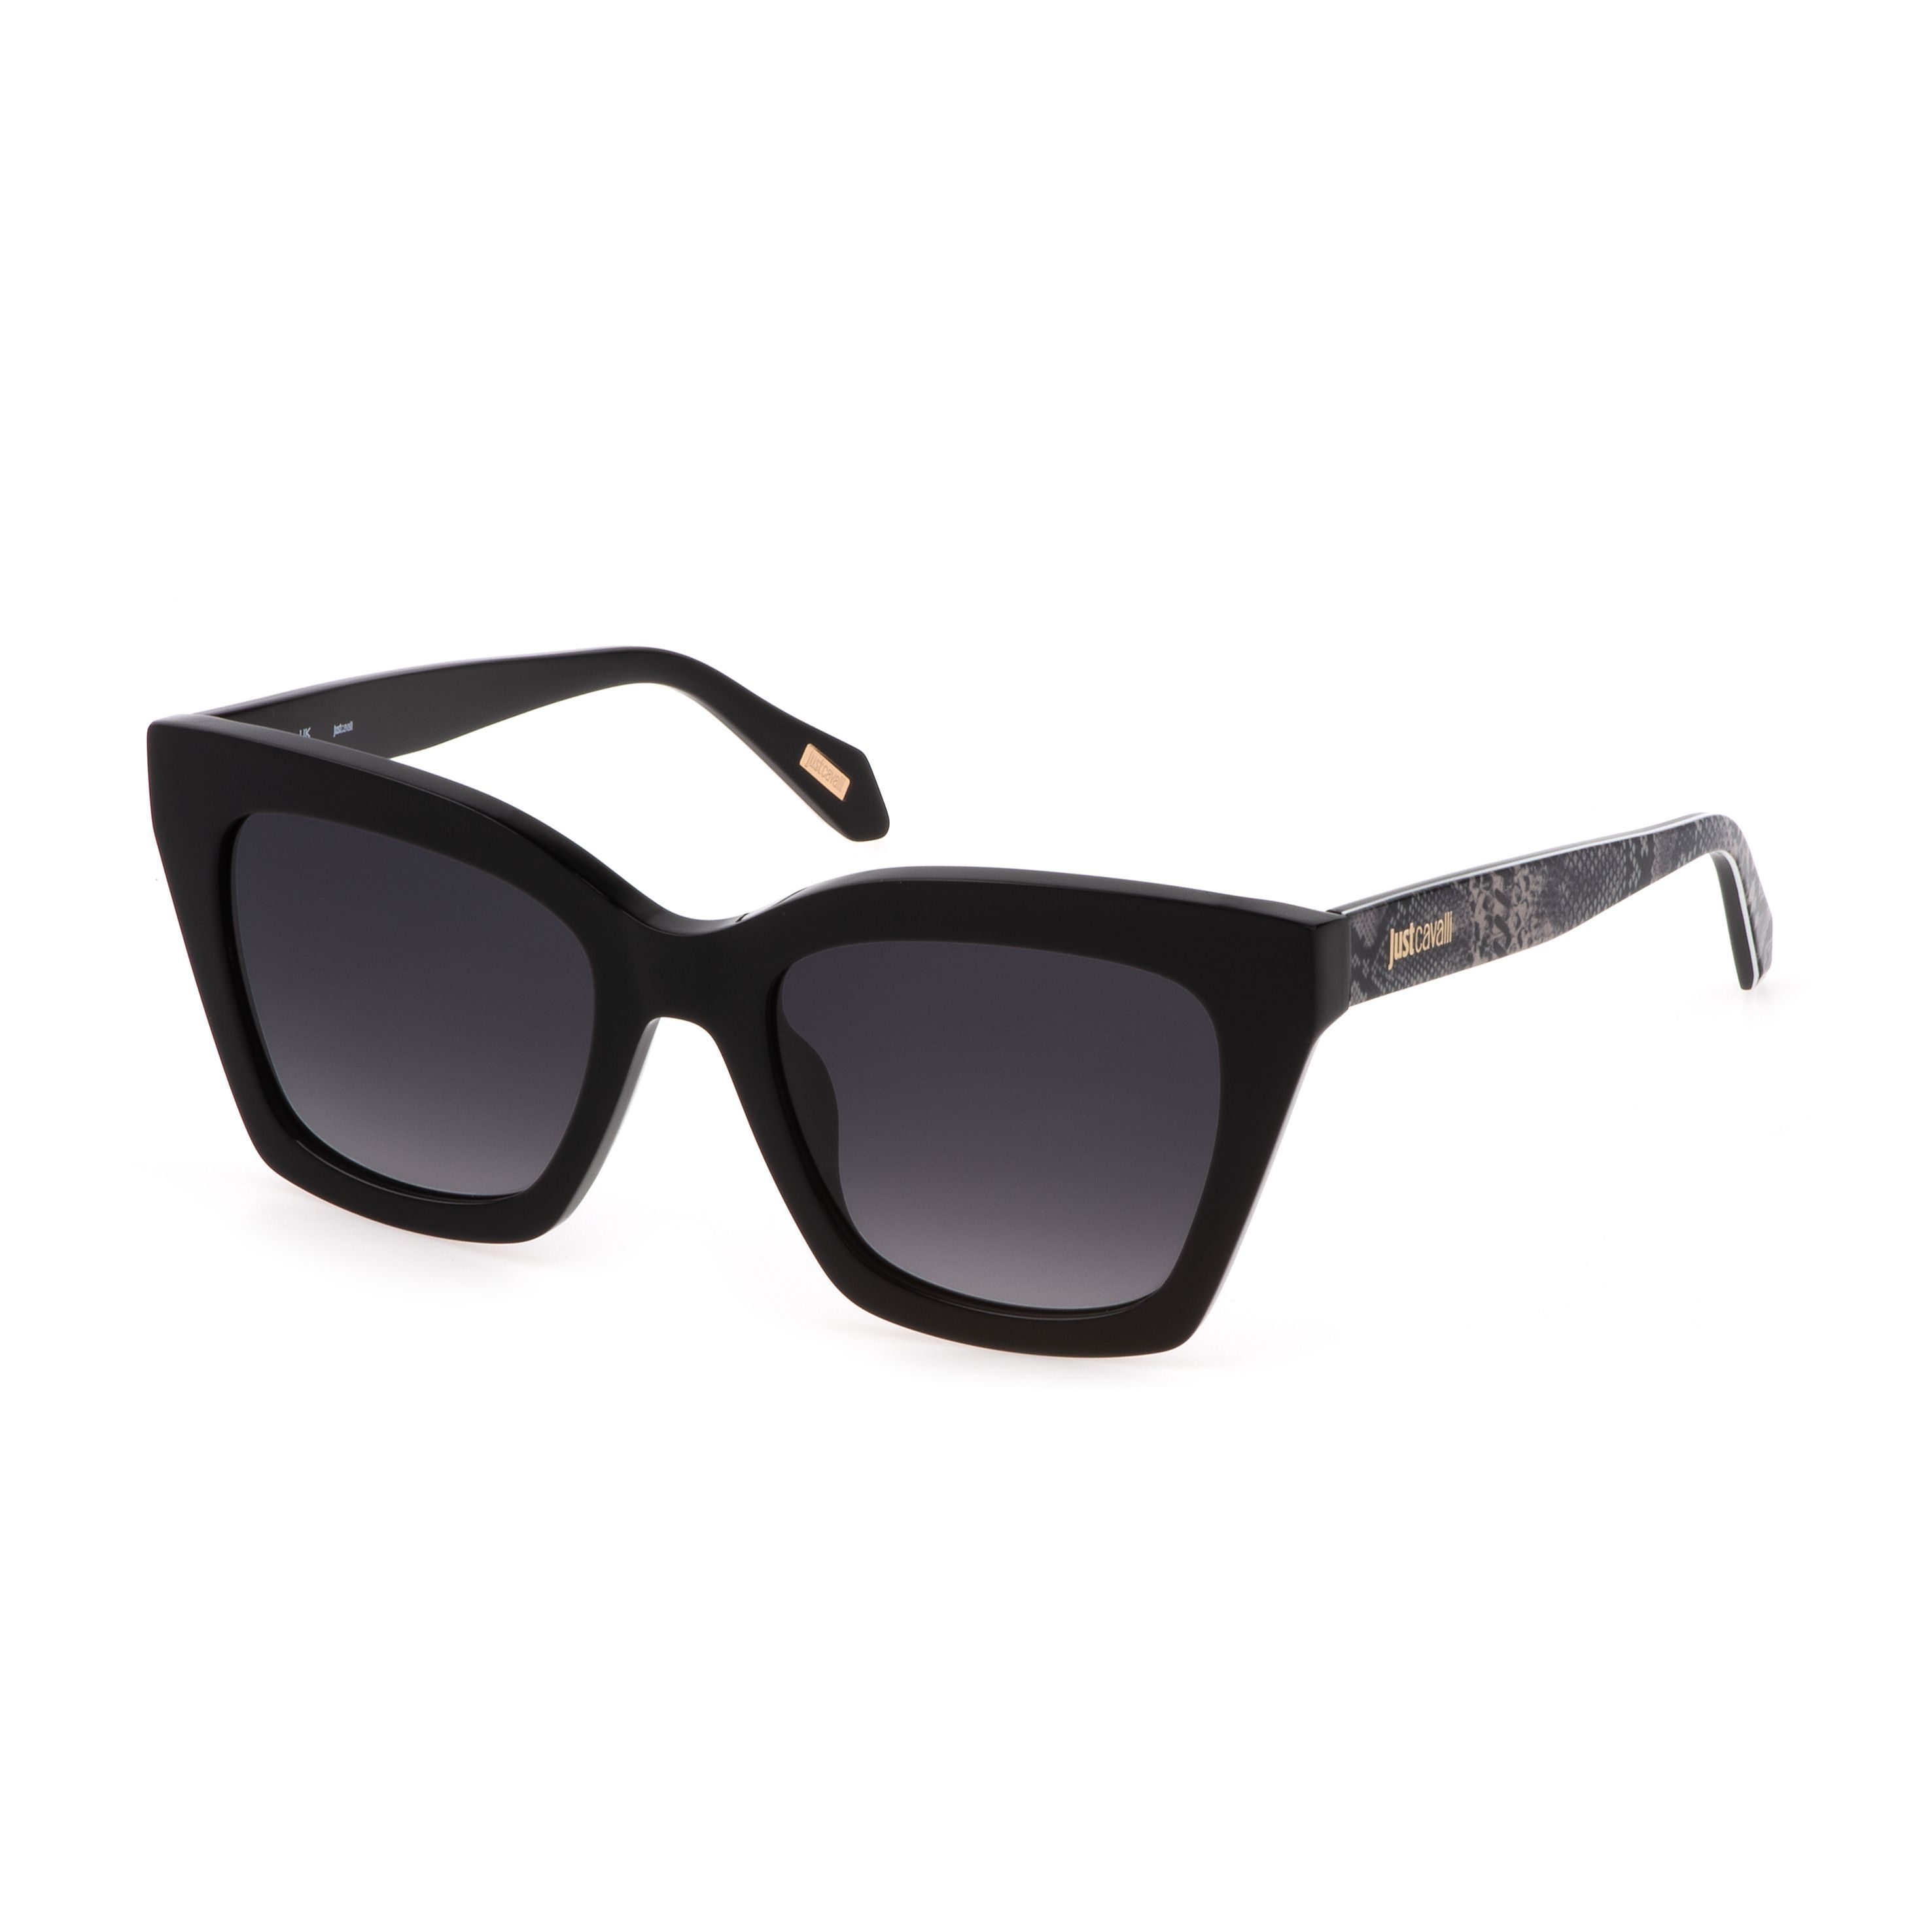 SJC024 Cat Eye Sunglasses 700Y - size 52